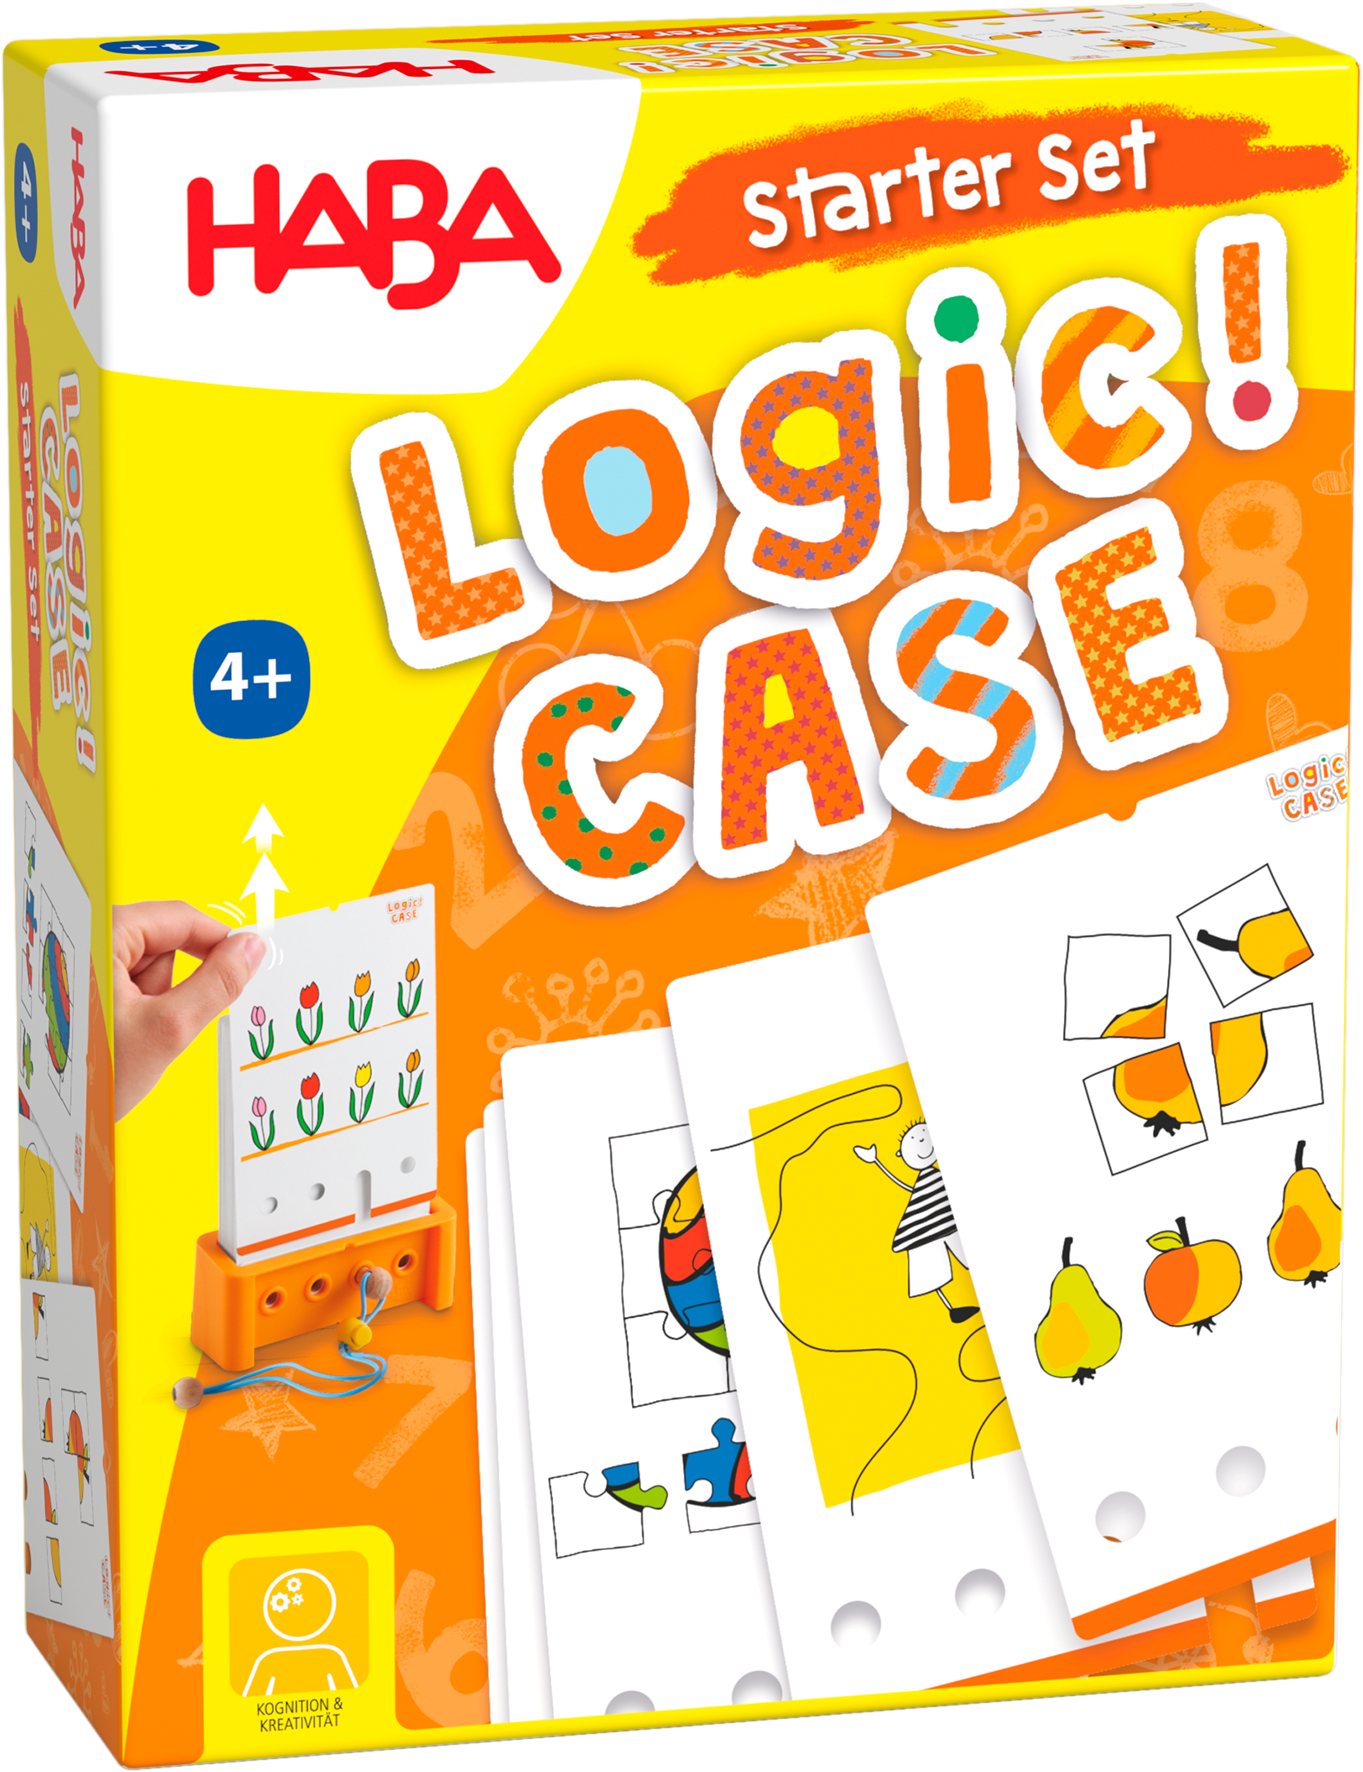 Logic! Case Starter Set